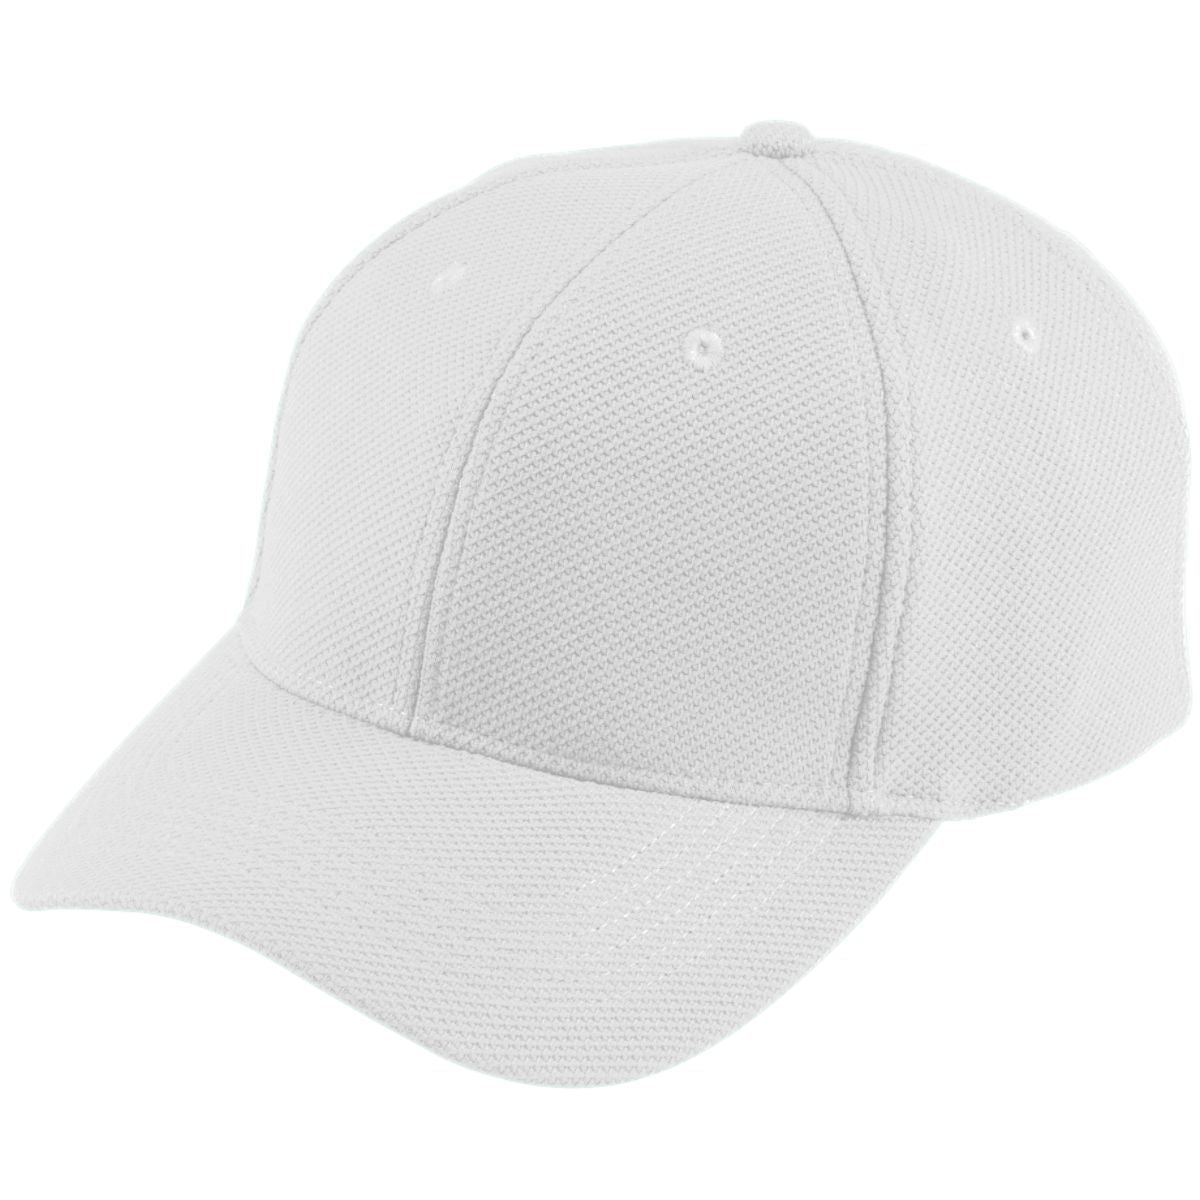 Augusta Sportswear Youth Adjustable Wicking Mesh Cap